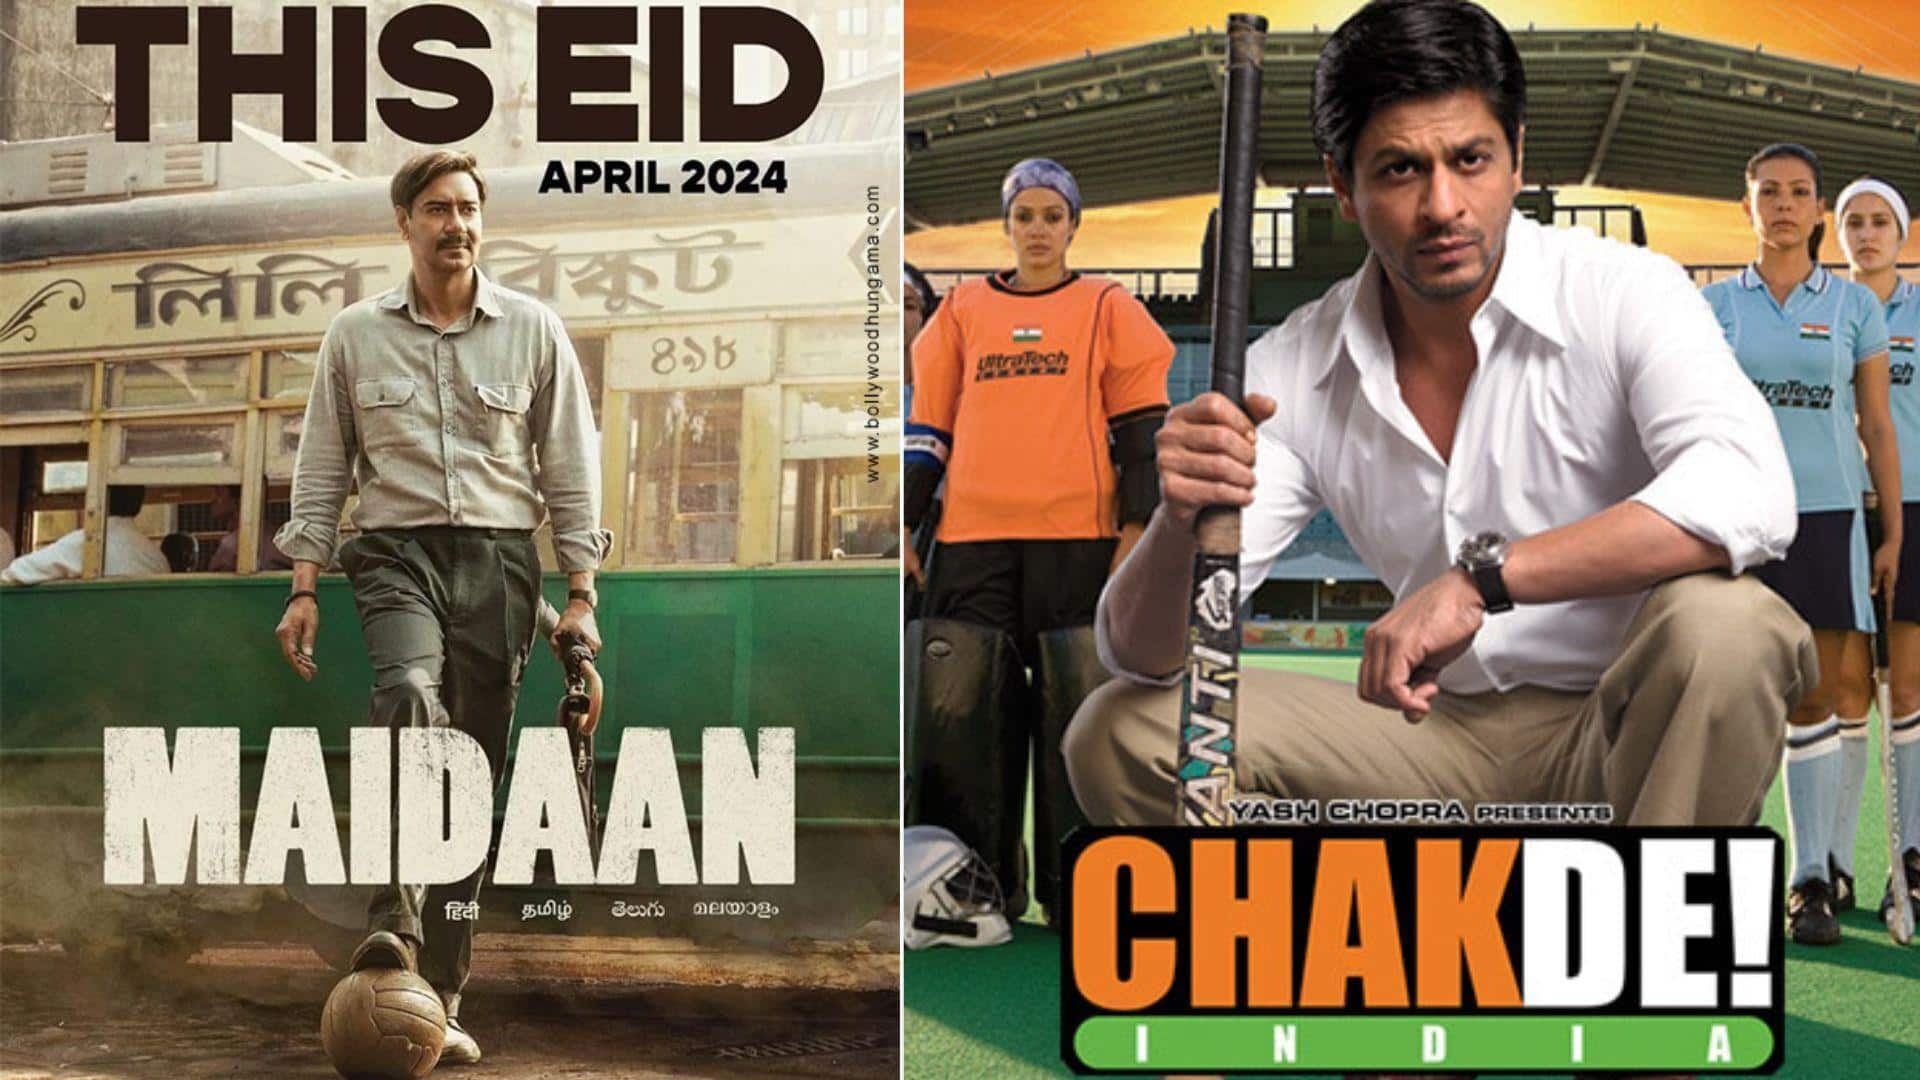 'No similarities': 'Maidaan' director dismisses comparisons with 'Chak De! India'